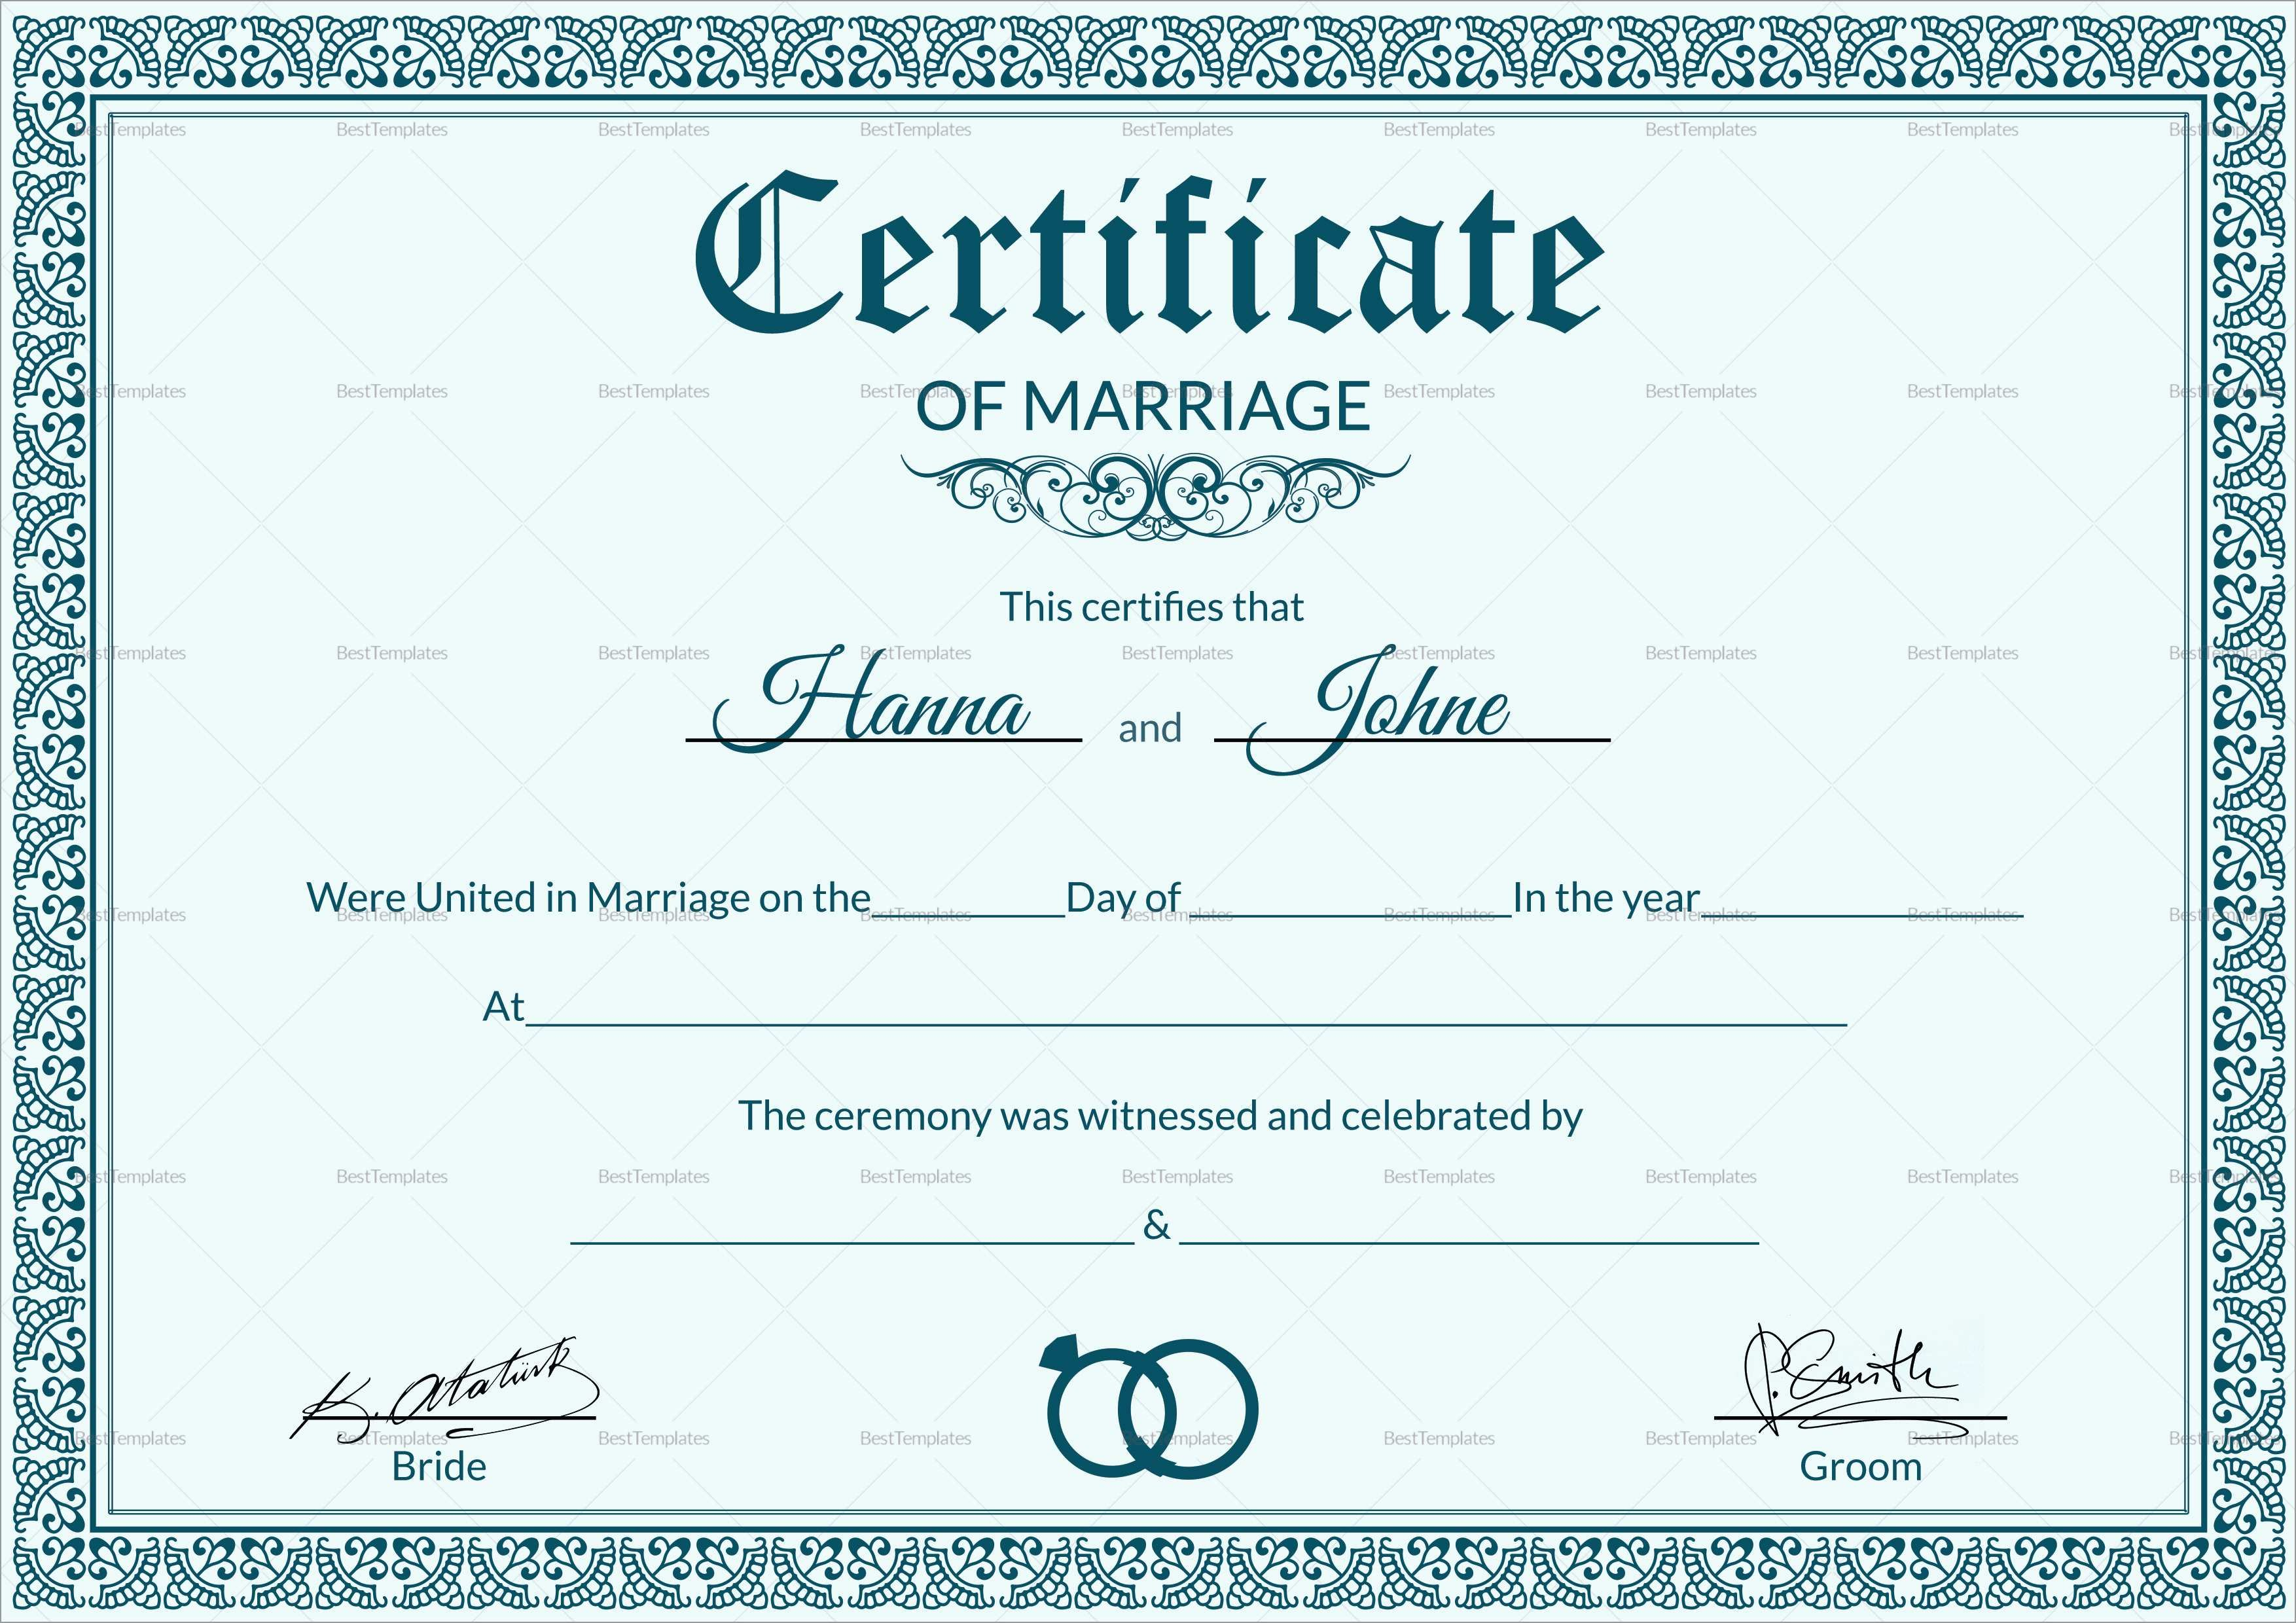 Elegant Free Marriage Certificate Template Word  Best Of Template inside Certificate Of Marriage Template